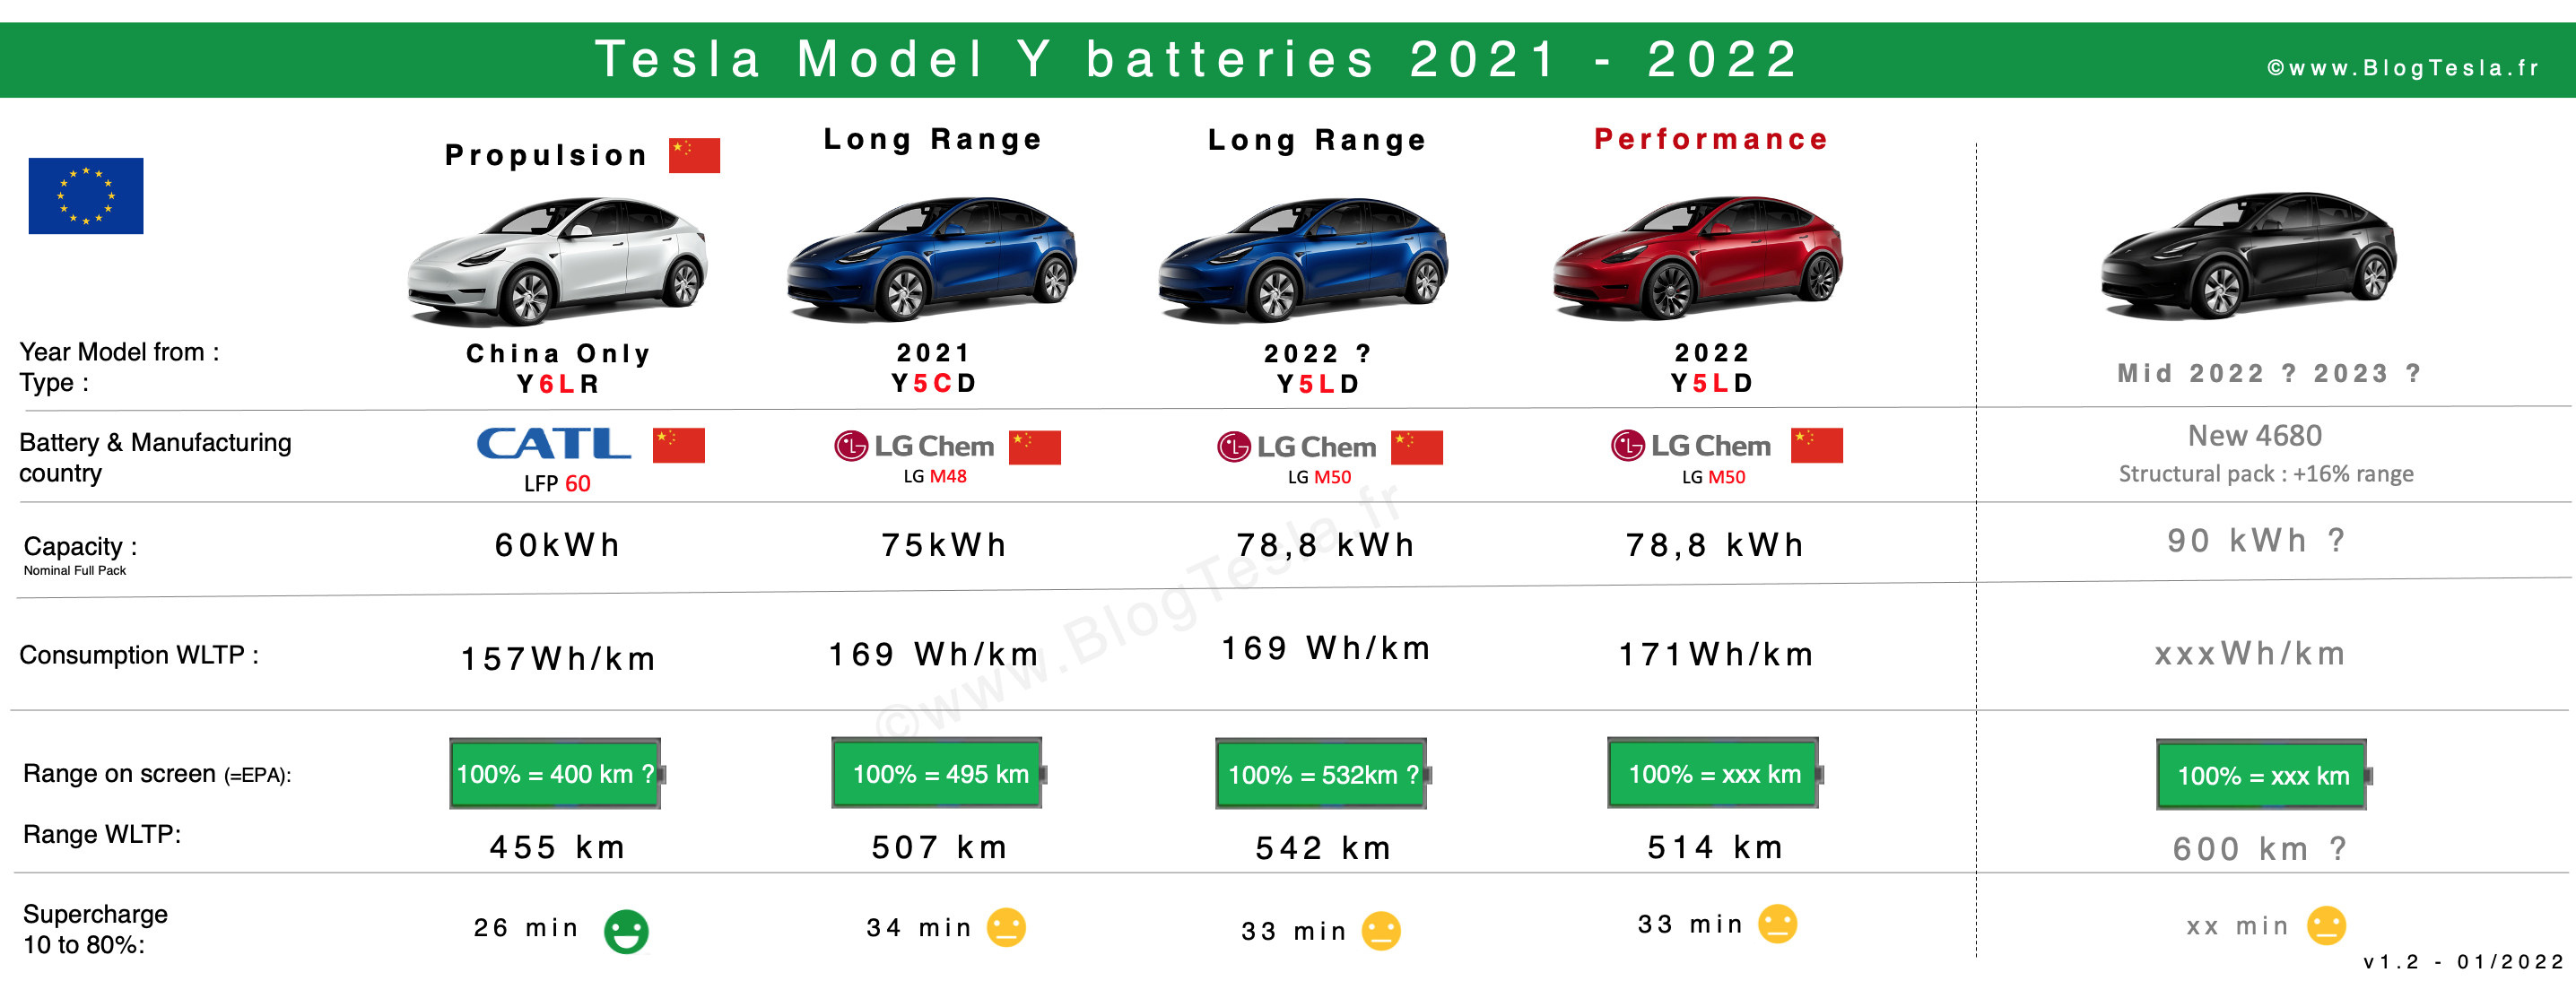 Batteries-Tesla-Model-Y-2022.png